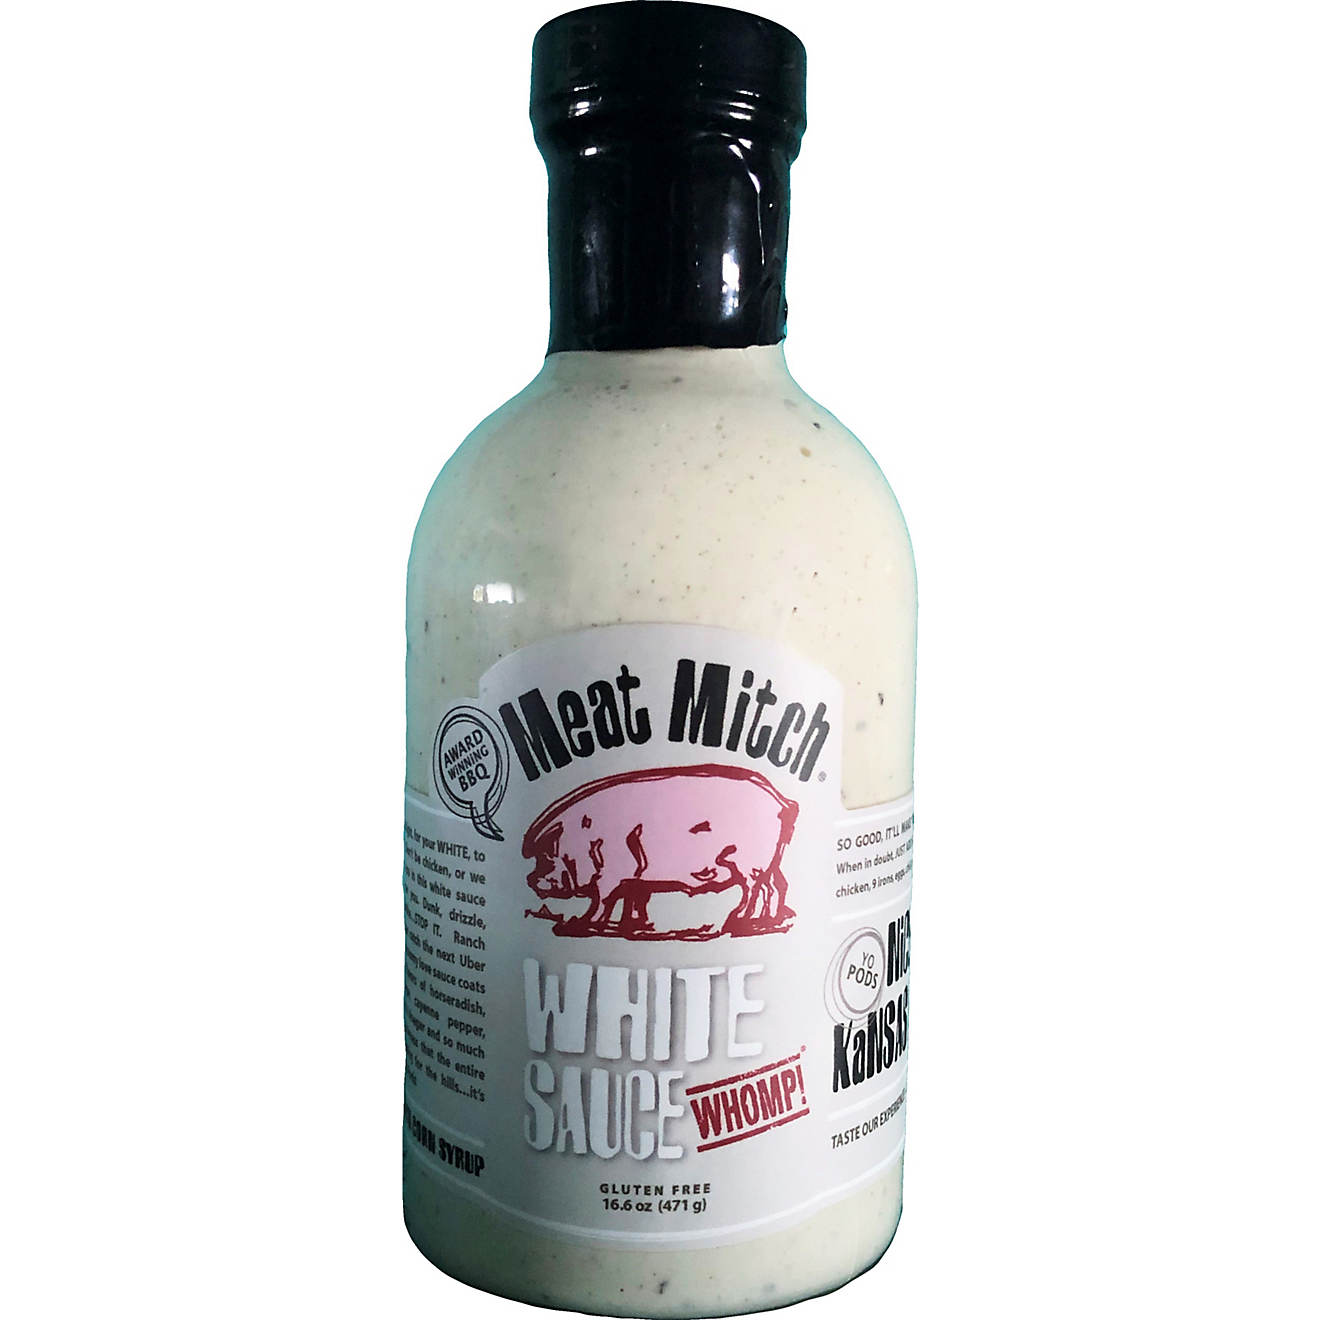 Meat Mitch Whomp White 16.6 oz Sauce